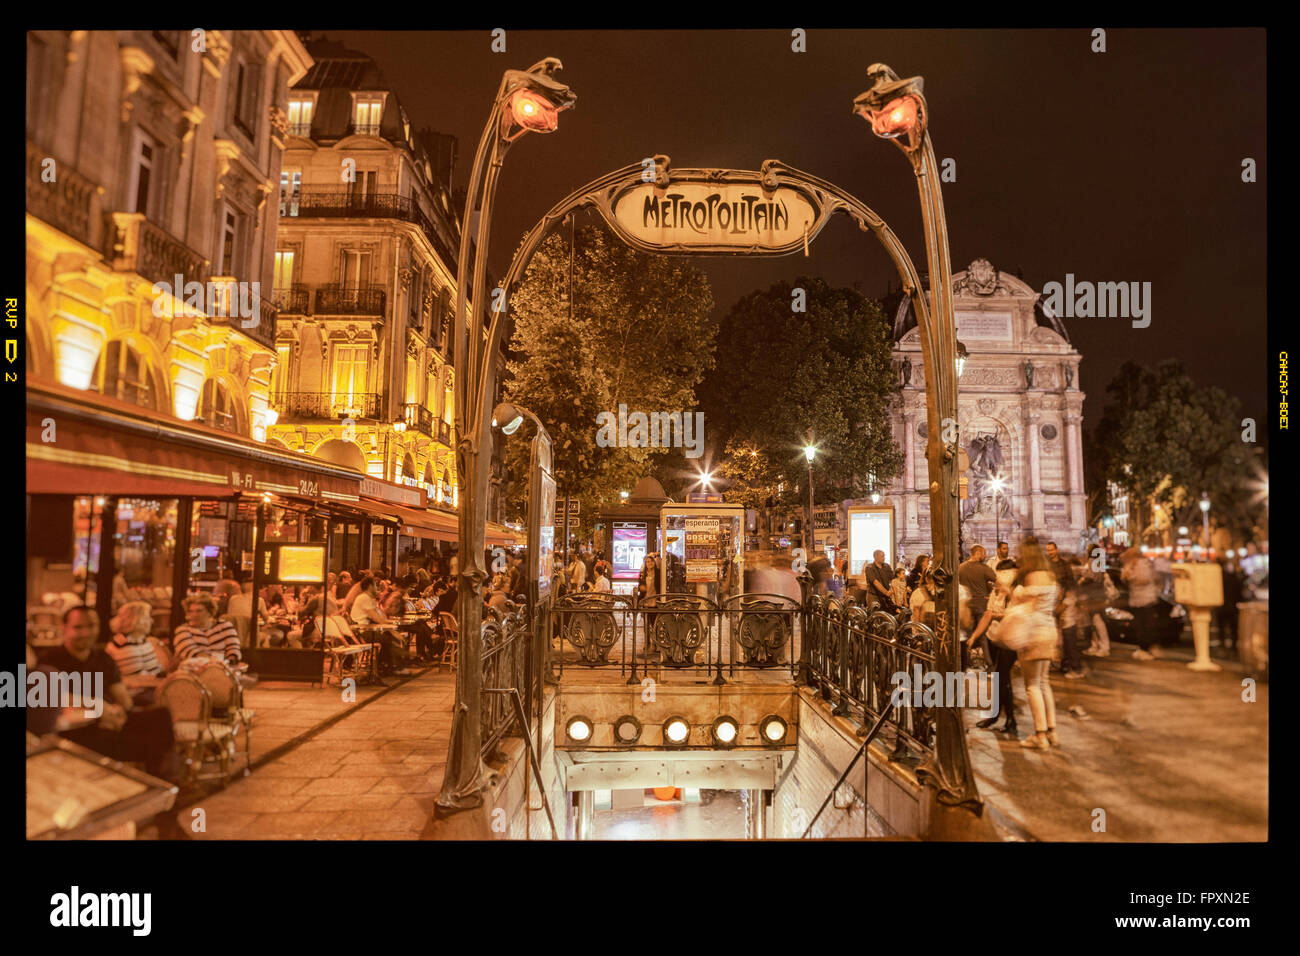 PARIS - JULY 12, 2014: Art Noveau Metropolitan sign in Place St. Michel. Saint Michel station located in the center of Paris. Stock Photo